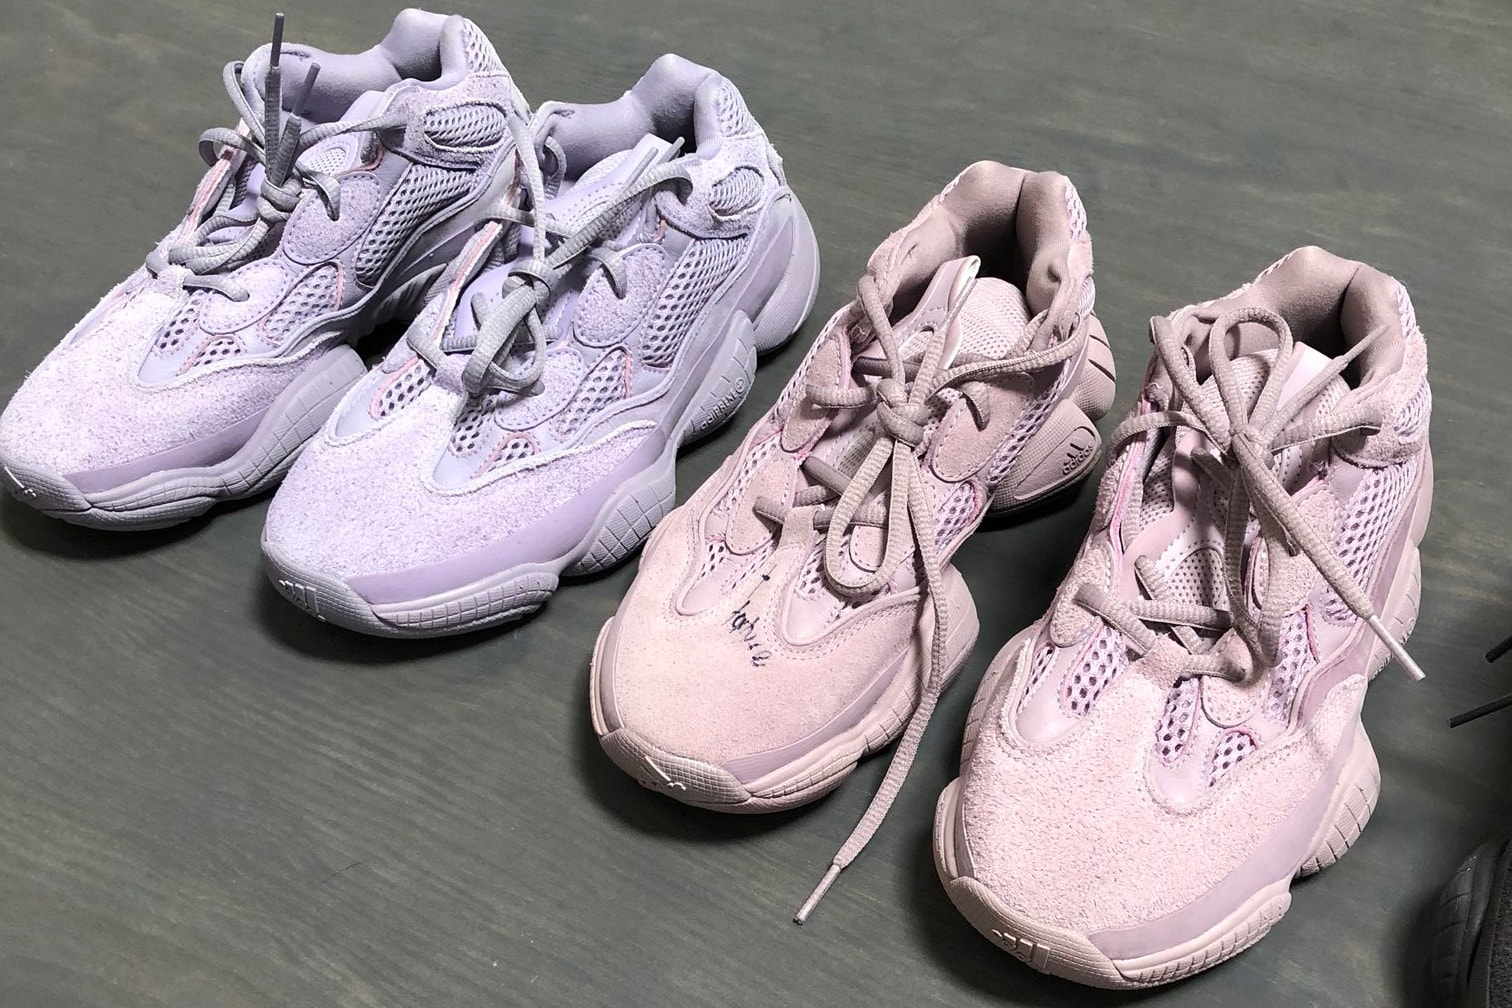 Kanye West's Yeezy shoe prototypes, valued at over $1 million, set to go up  for sale